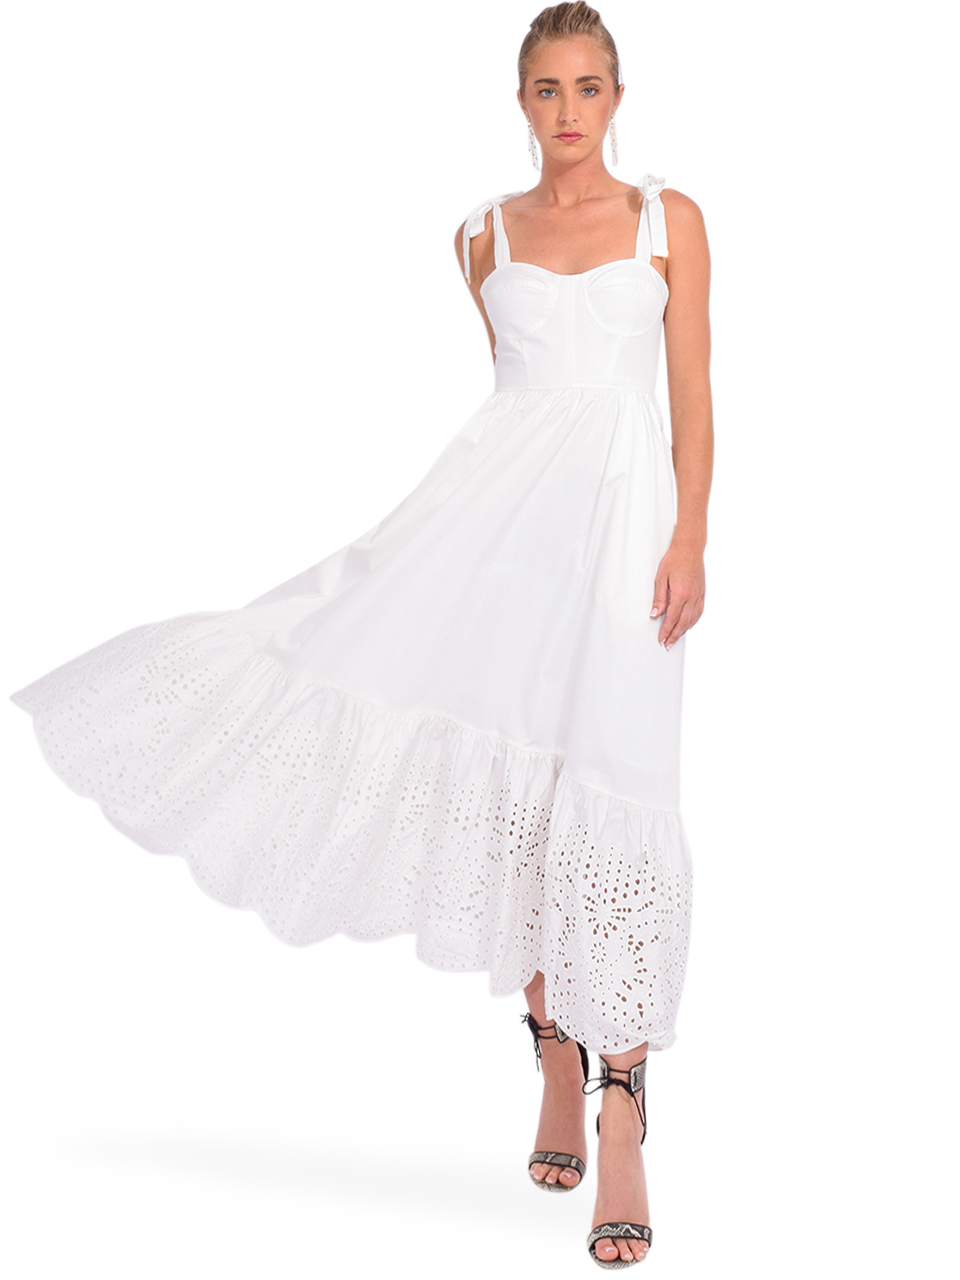 Karina Grimaldi Rio Bustier Maxi Dress in White Front View 2